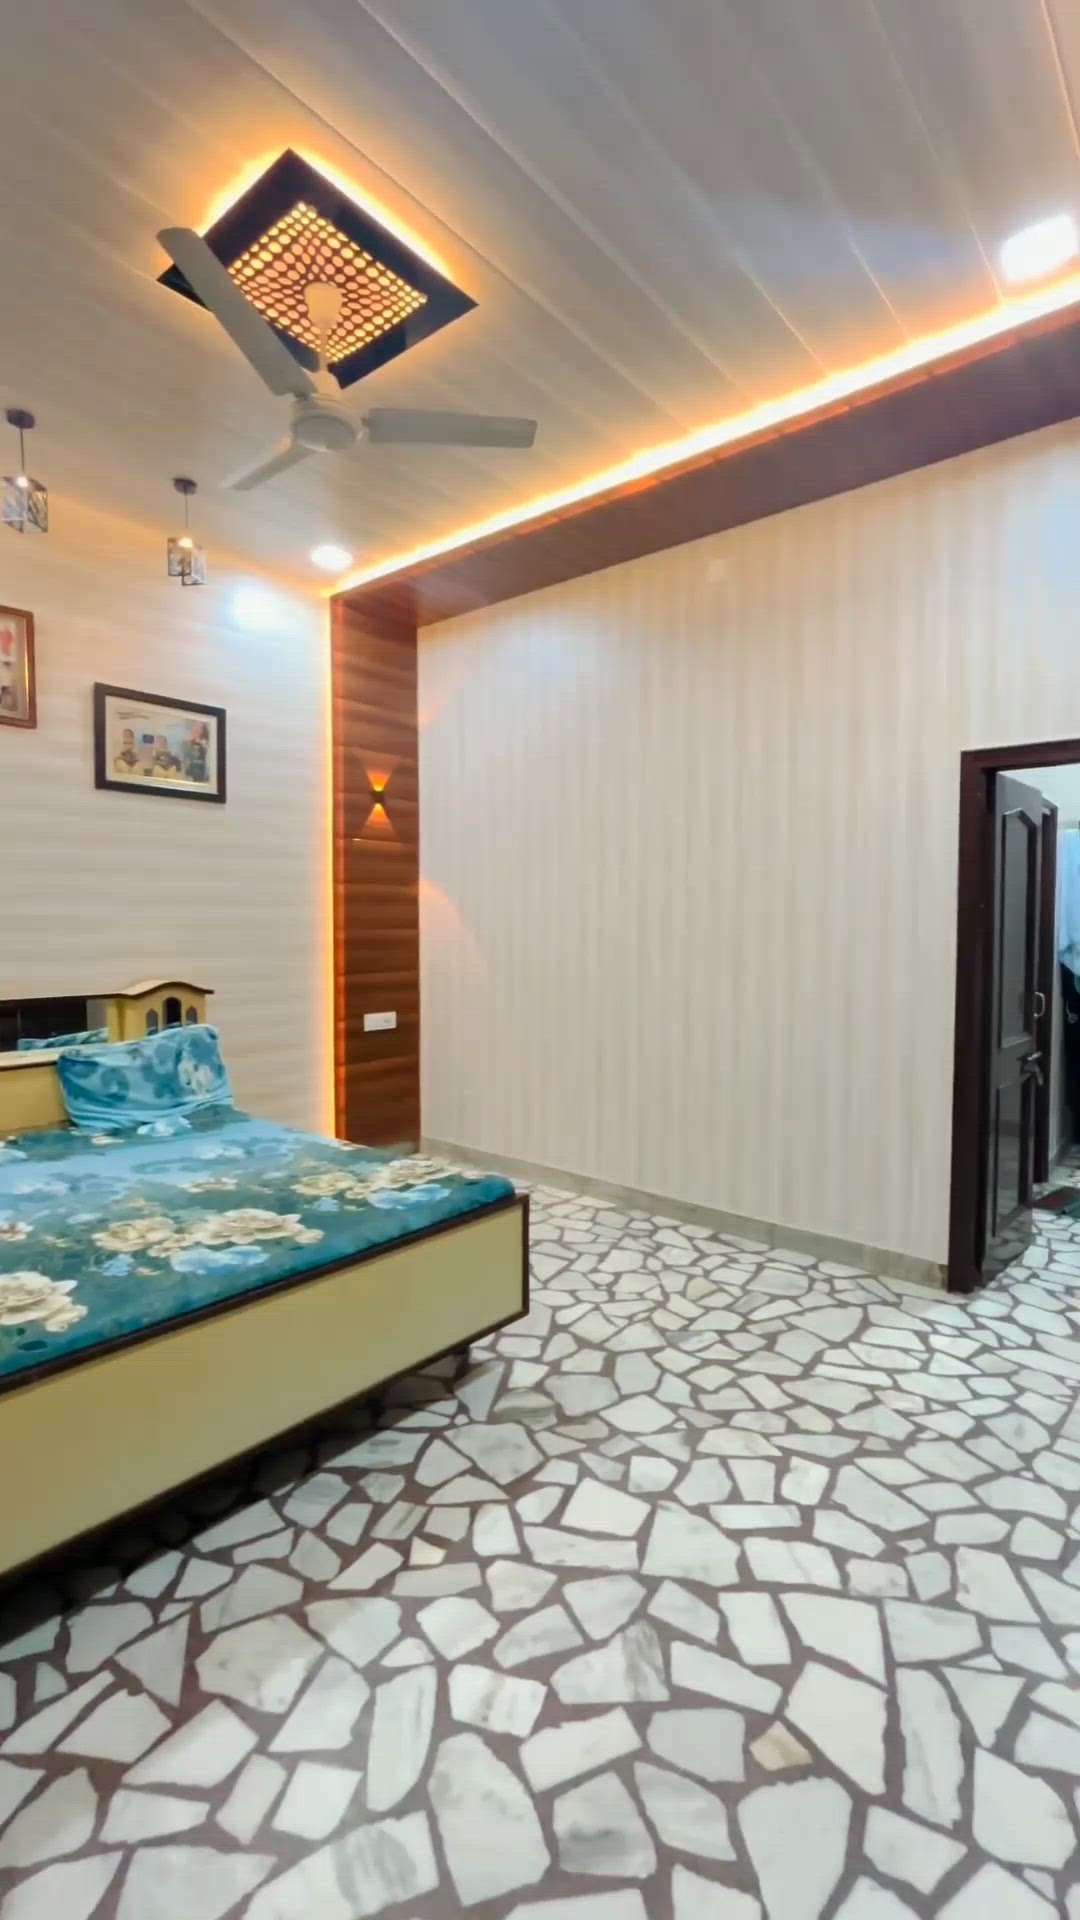 #pvcwallpanel  #pvcceilingdesign  #BedroomDecor  #Modularfurniture work karane ke liye contact kare
whats.+919625506863
call.+917060375916 Saqib Mirza